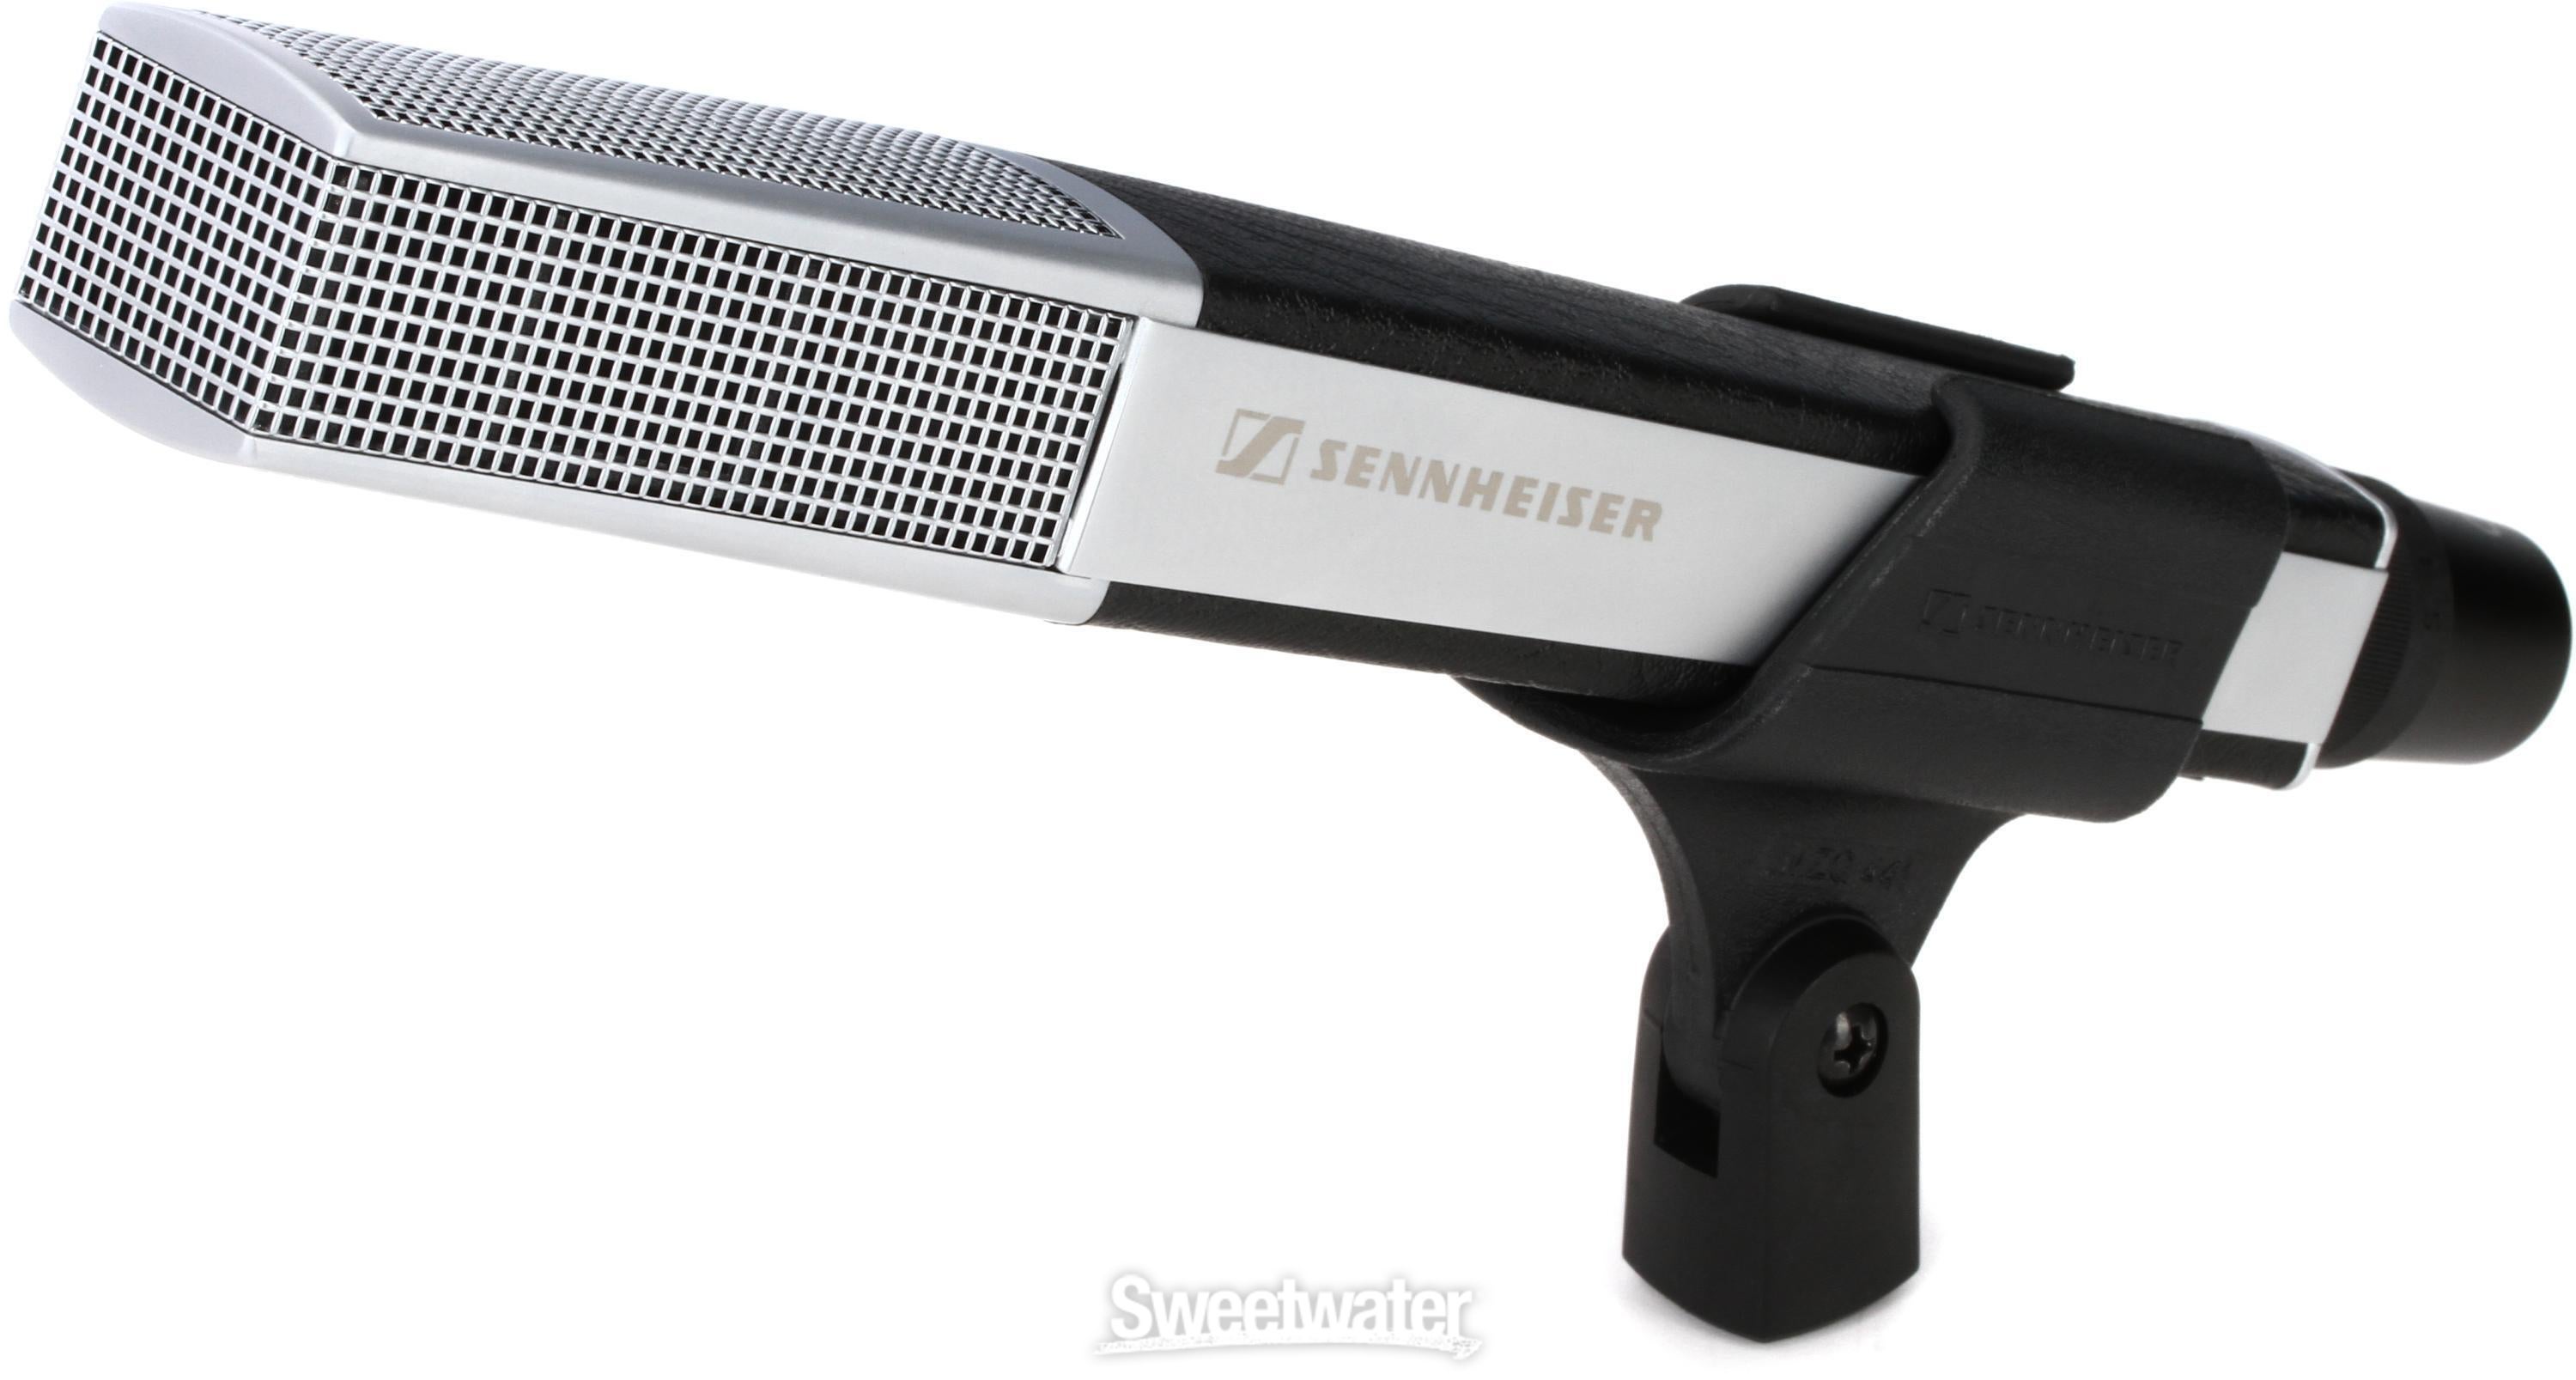 Sennheiser MD 441-U Dynamic Supercardioid Microphone | Sweetwater